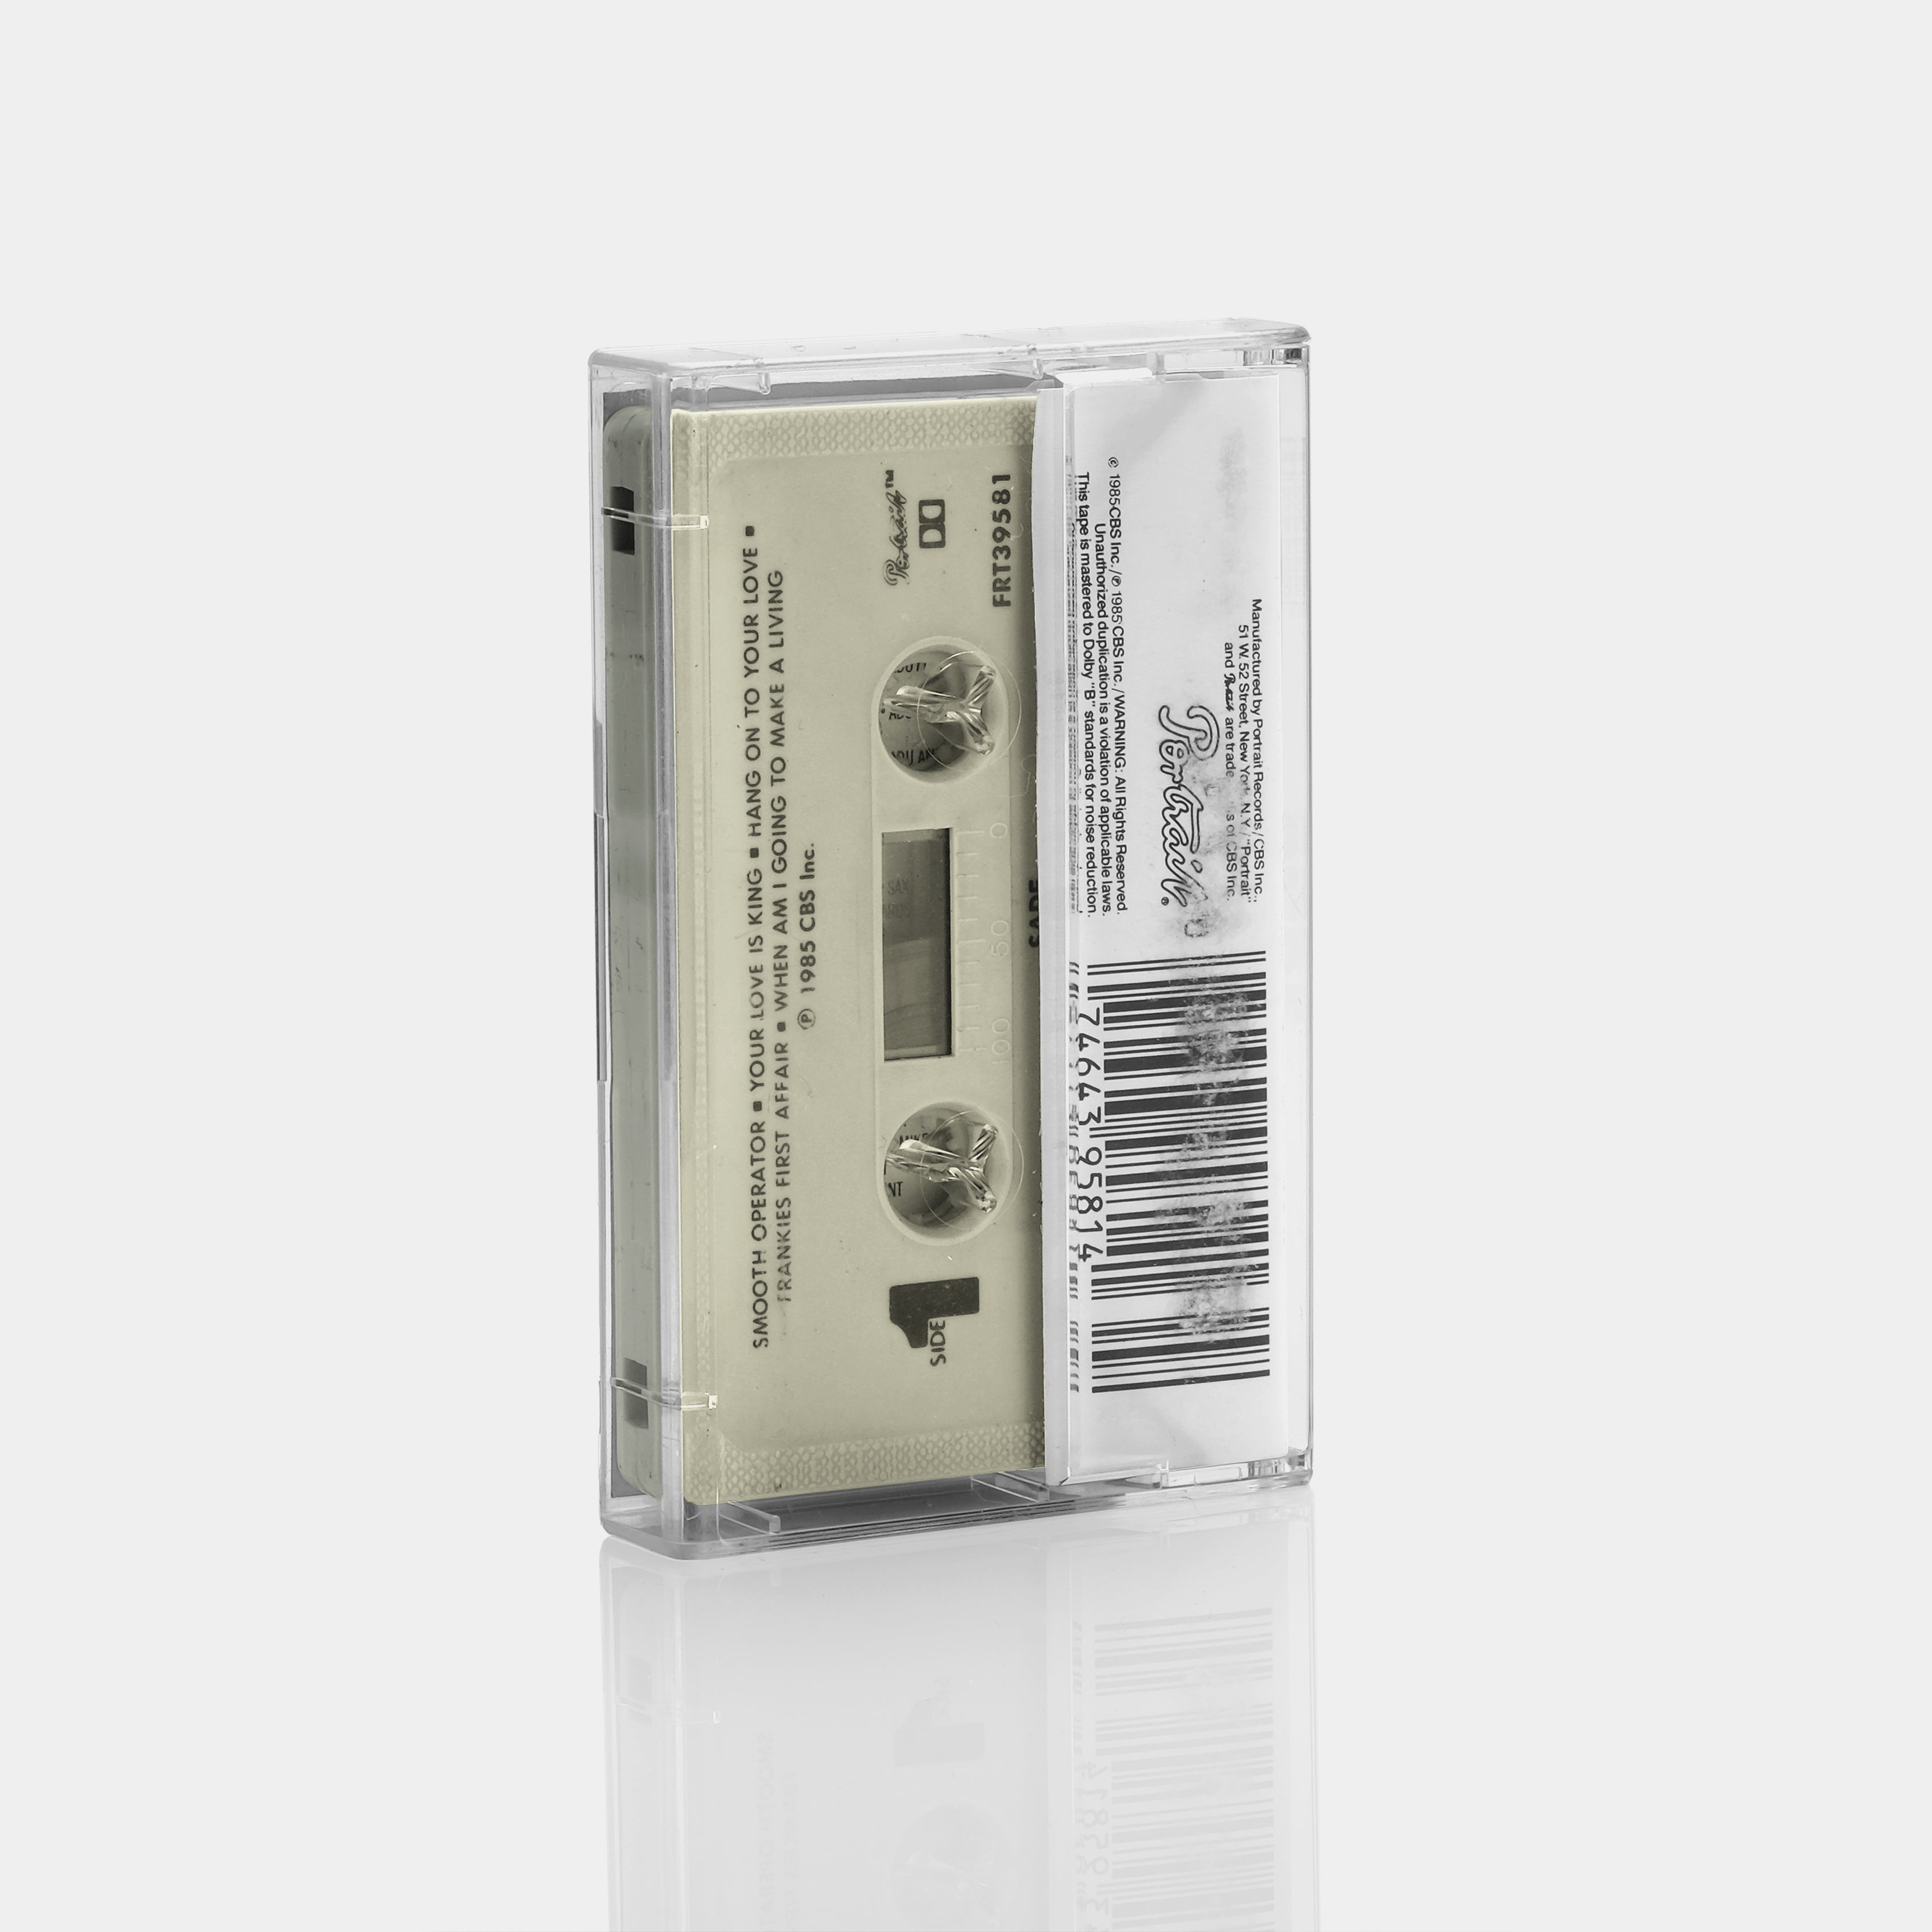 Sade - Diamond Life Cassette Tape